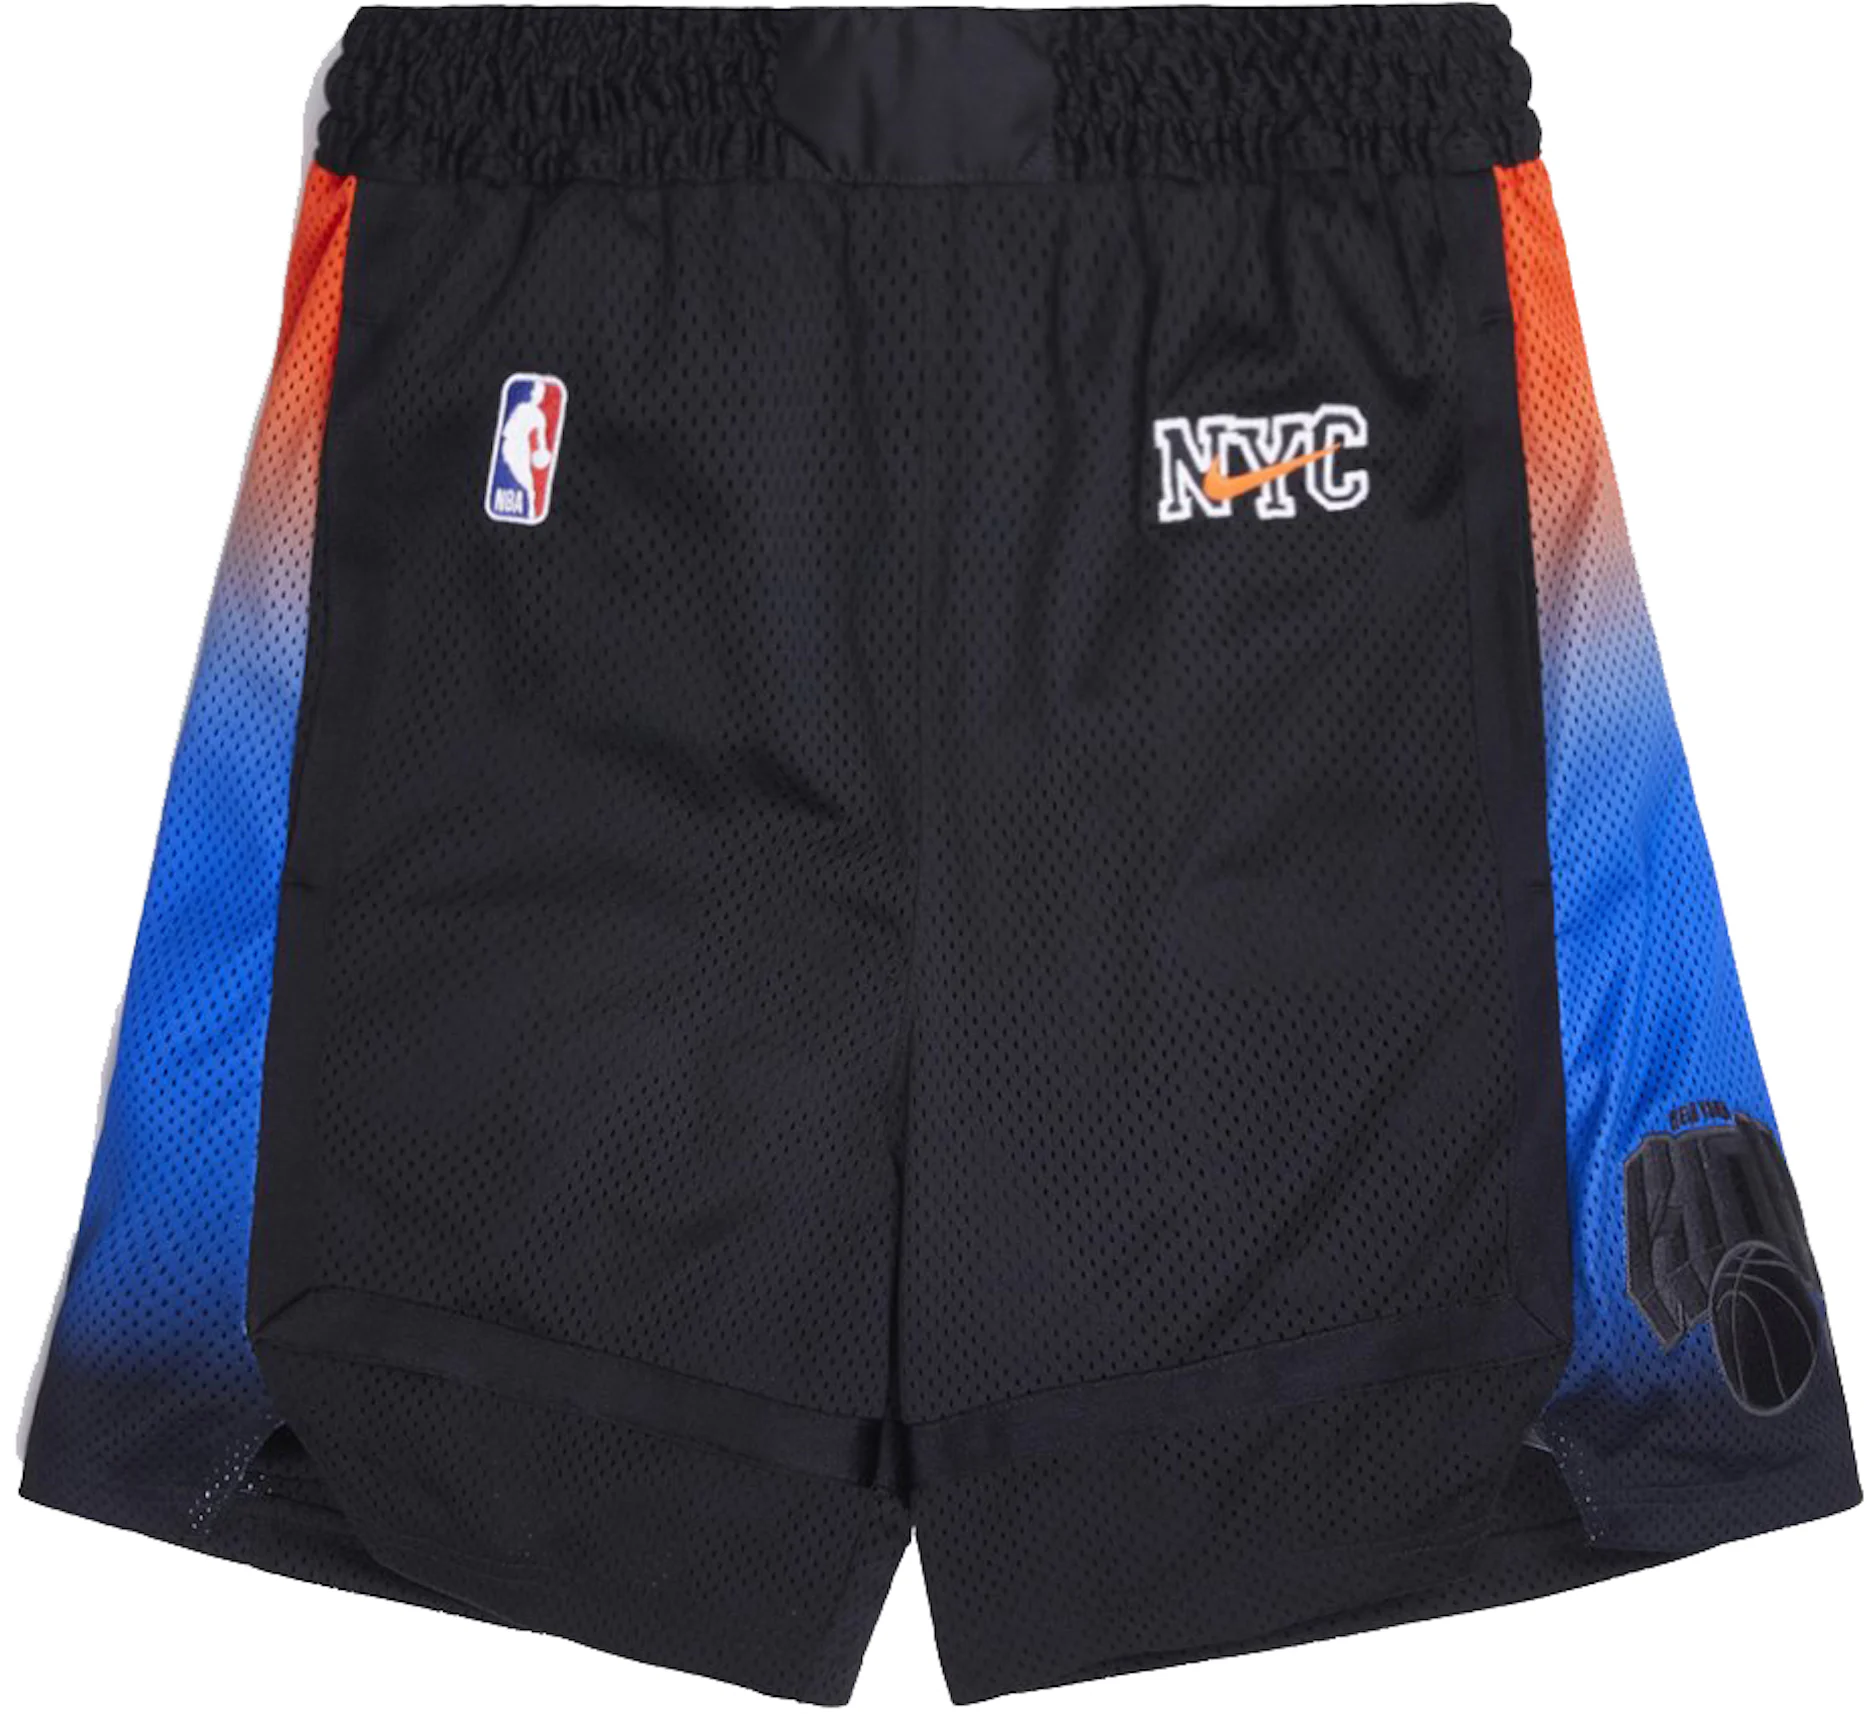 Kith & Nike for New York Knicks AOP Hoodie Black Men's - FW20 - GB